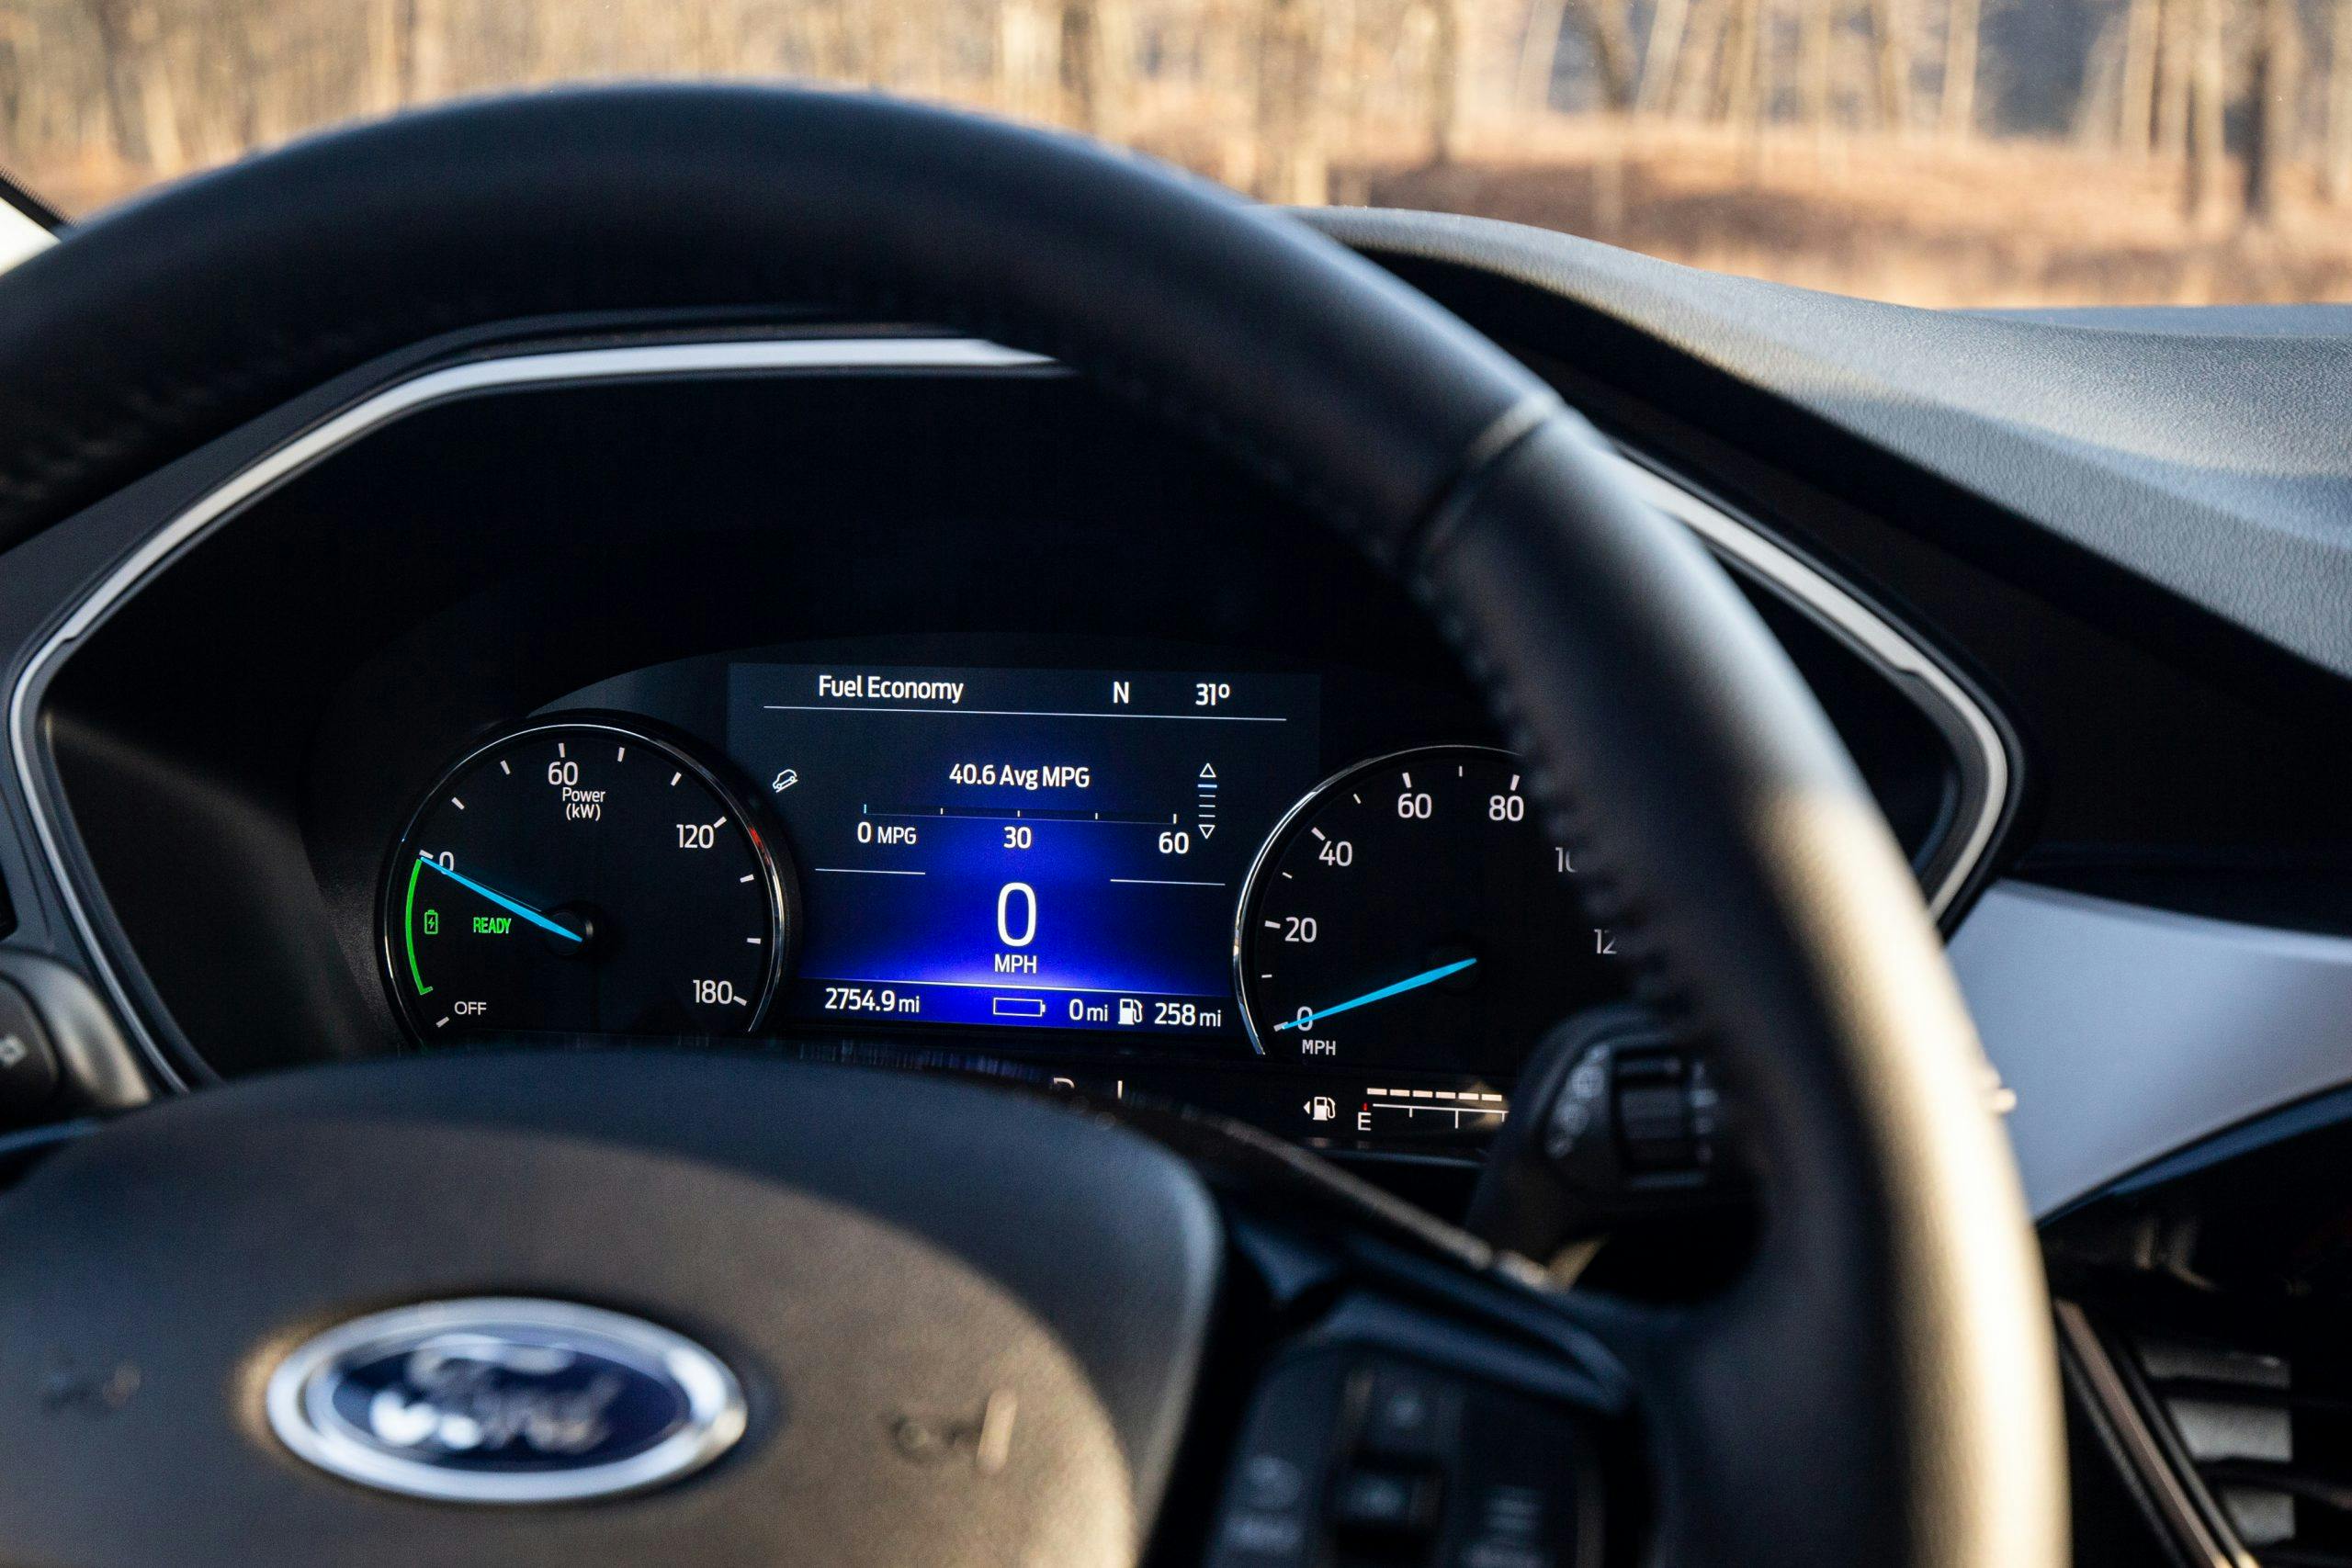 2021 Ford Escape PHEV interior digital dash gauges